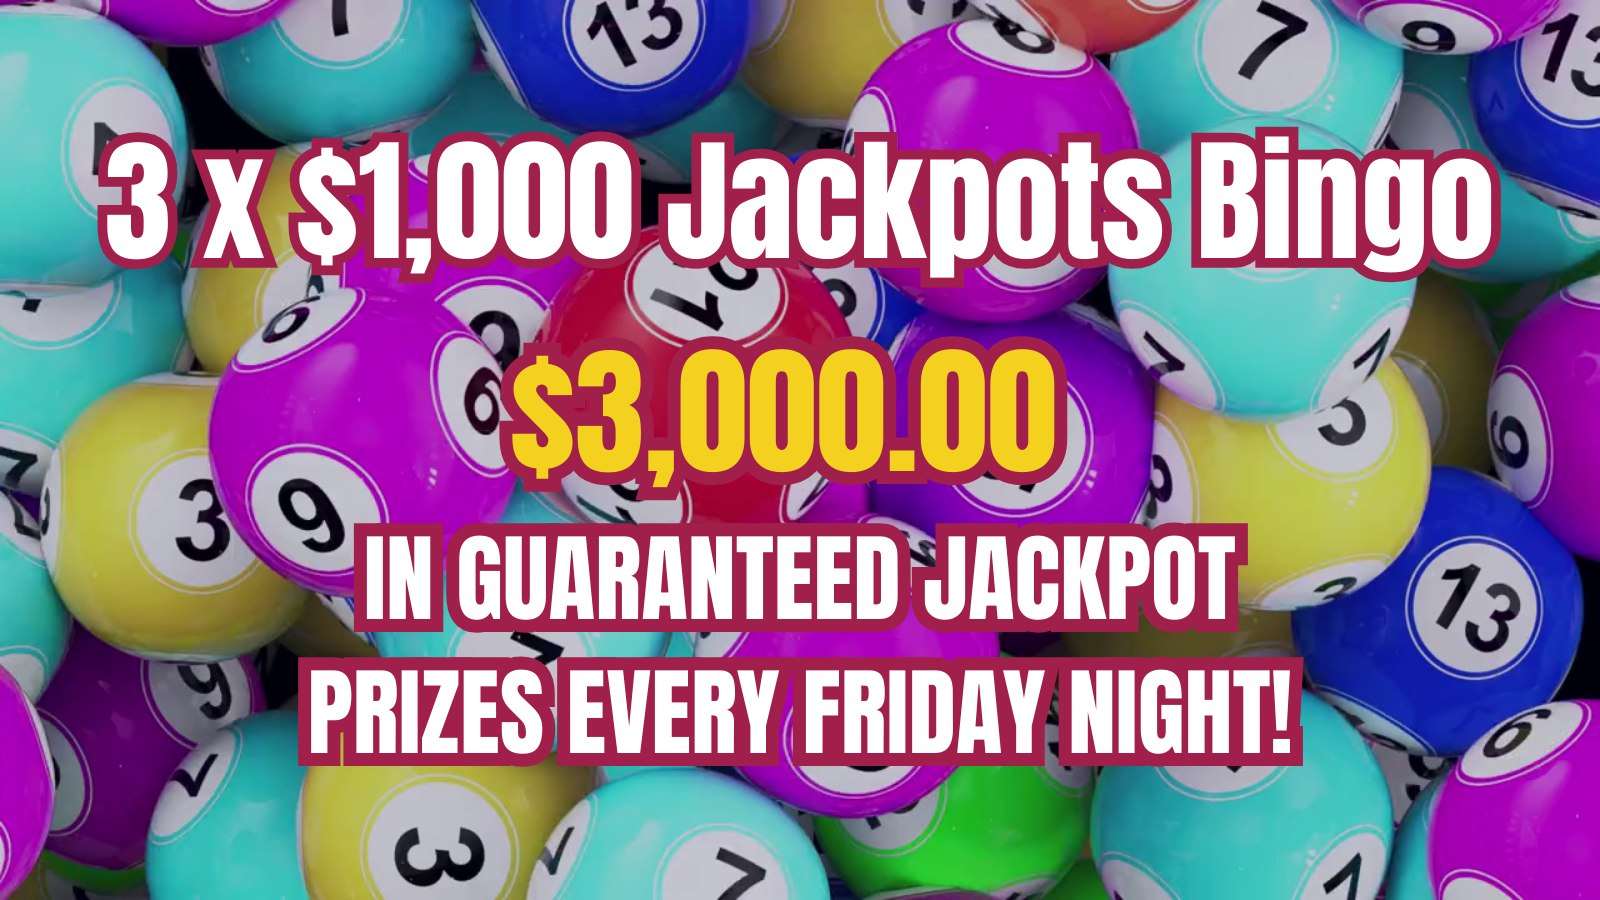 3 x $1000 Jackpots Bingo - $3,000.00 in guaranteed jackpot prizes